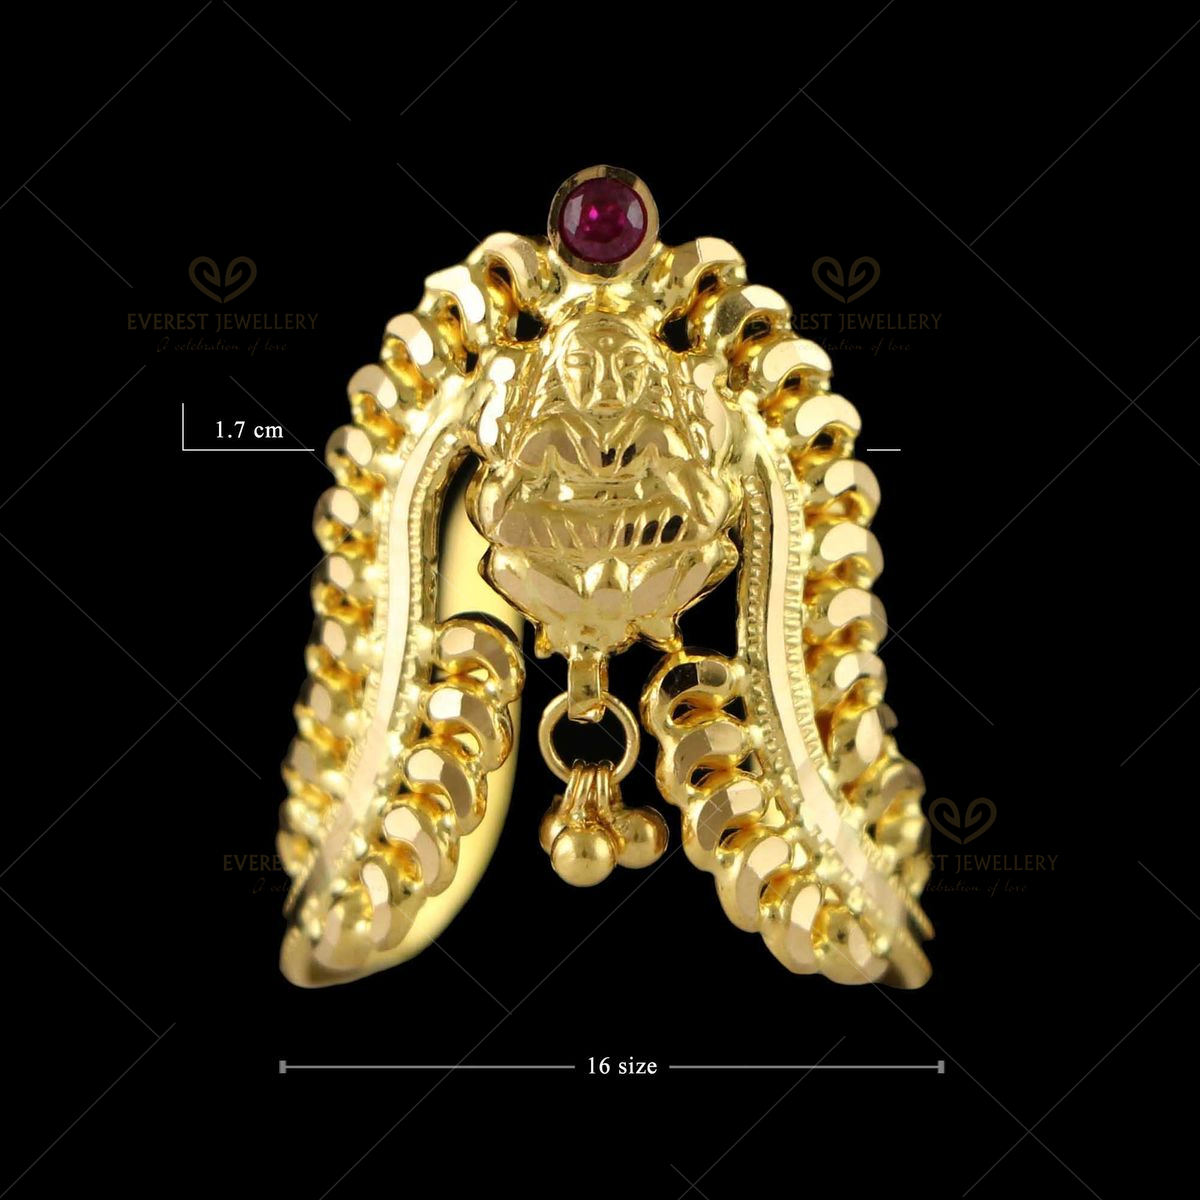 Antique Gold look alike Vanki Ring – Desire Collective